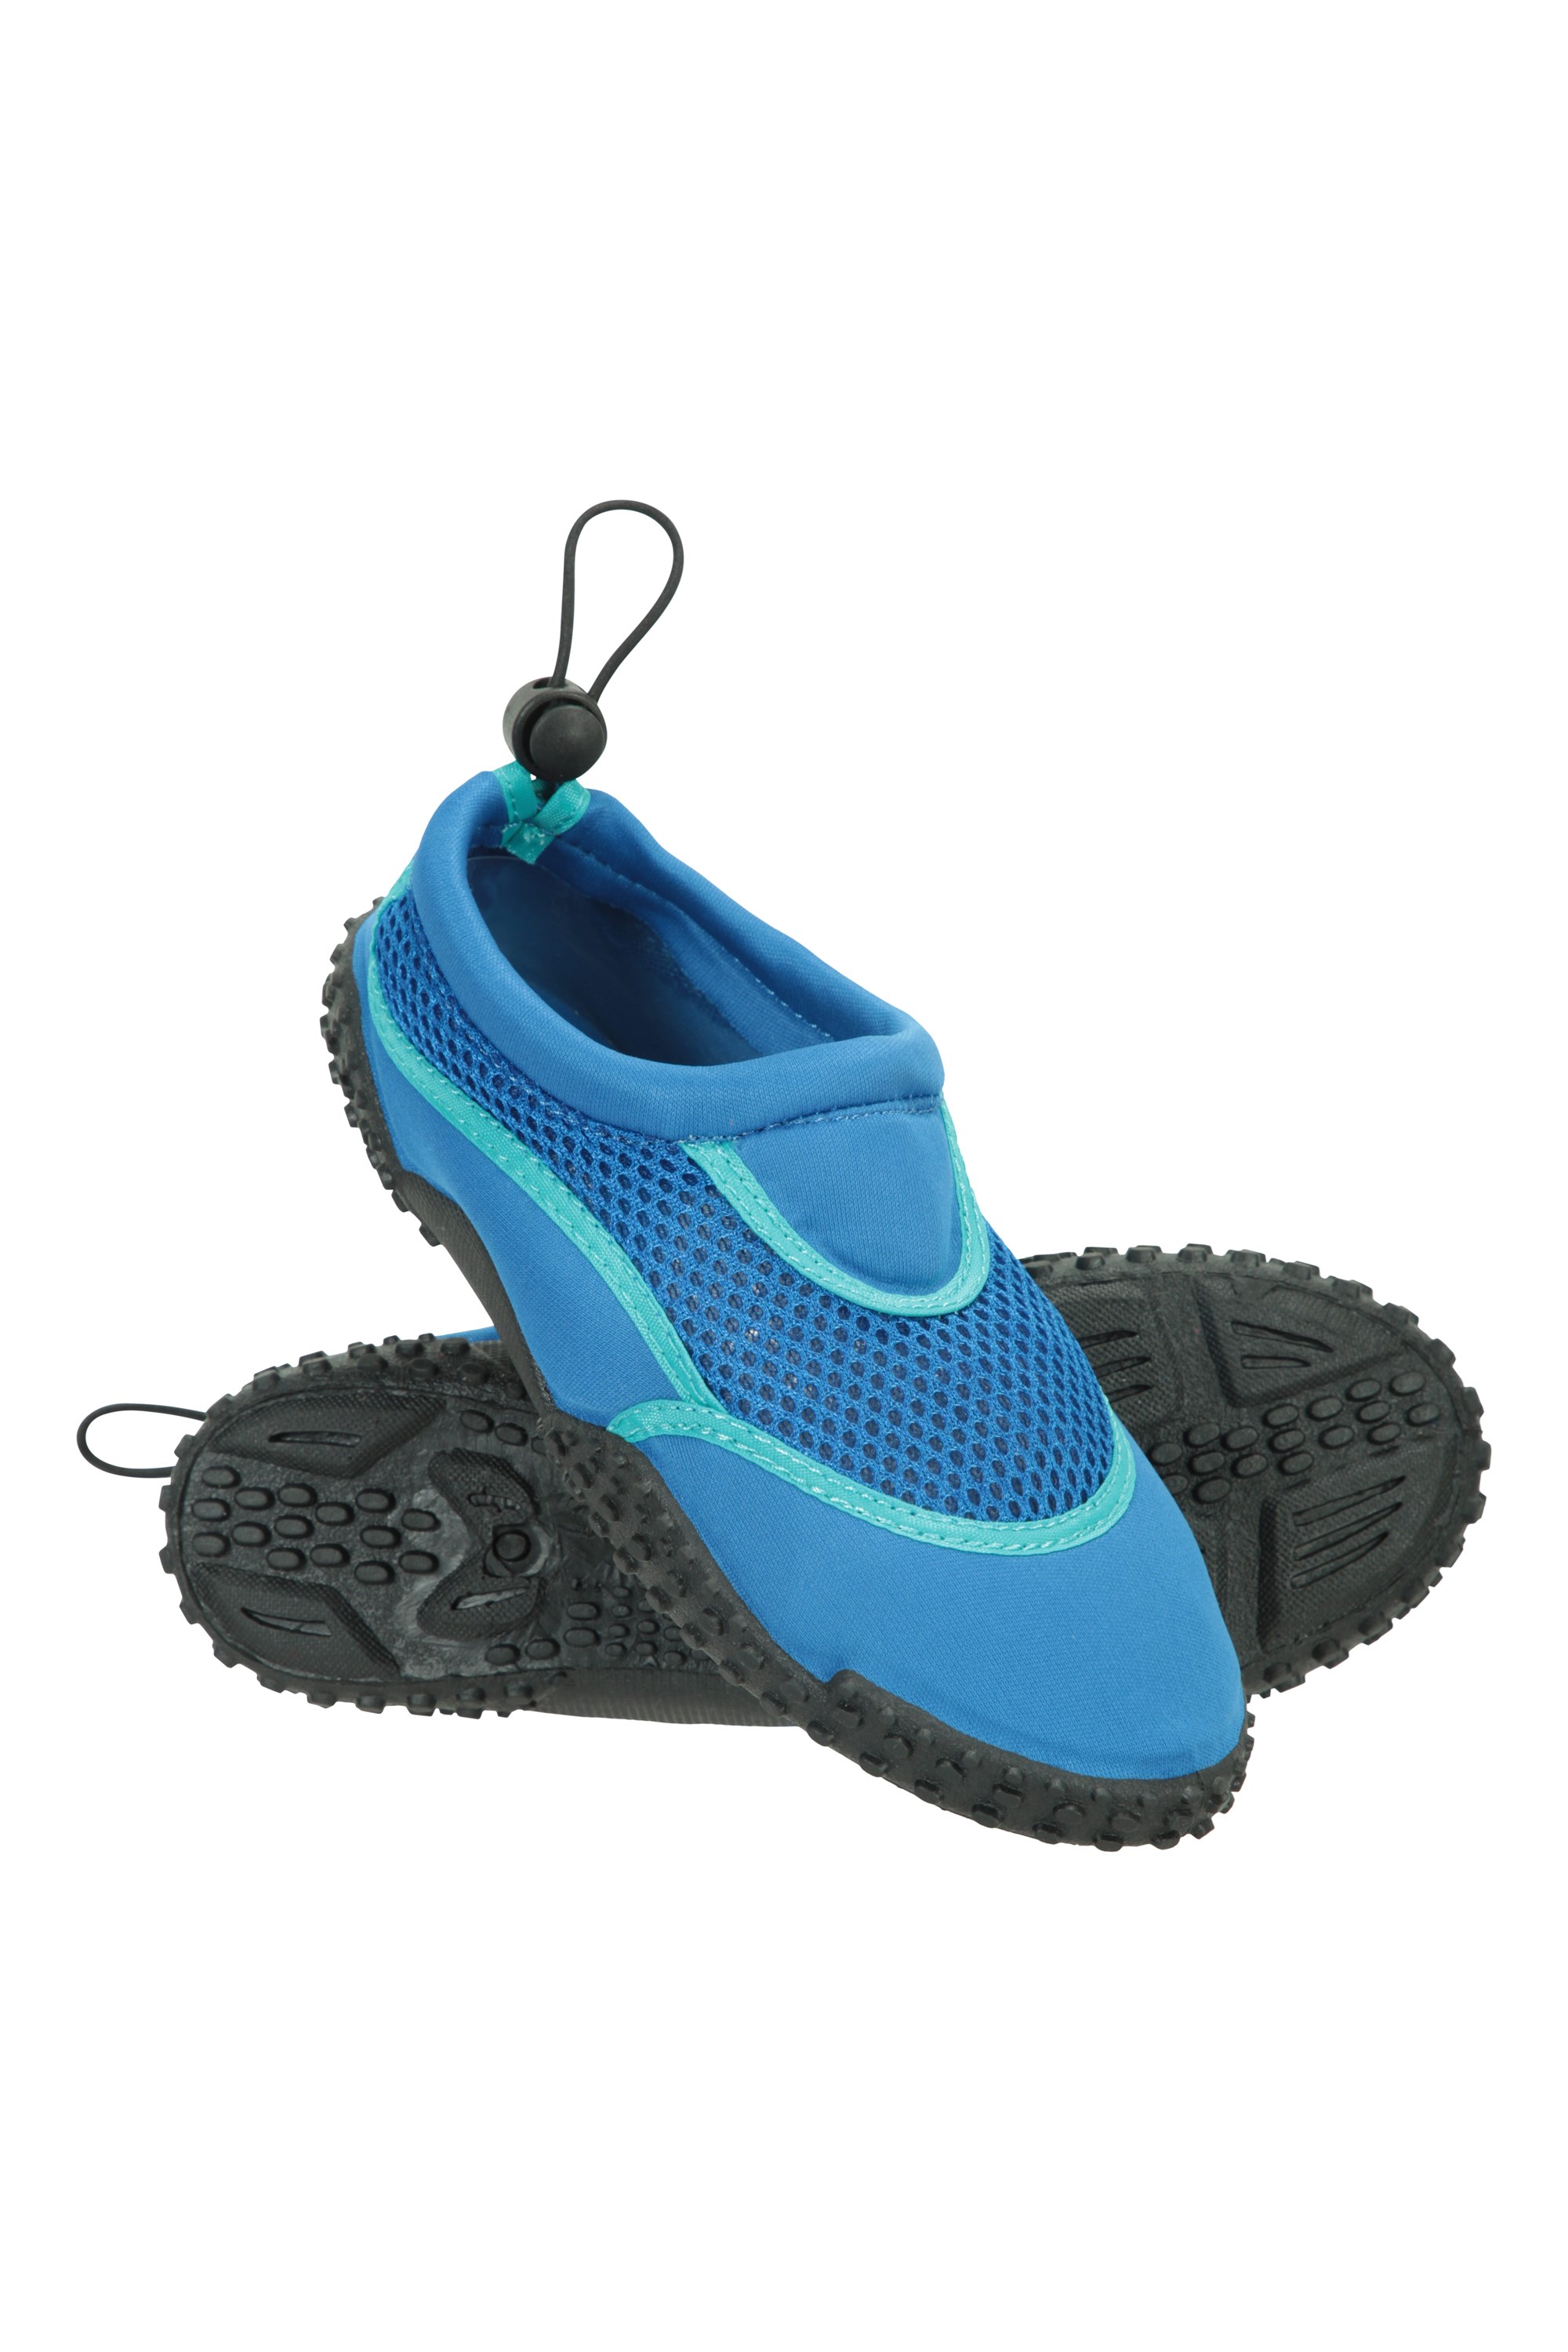 Bermuda Kids Adjustable Aqua Shoes | Mountain Warehouse GB